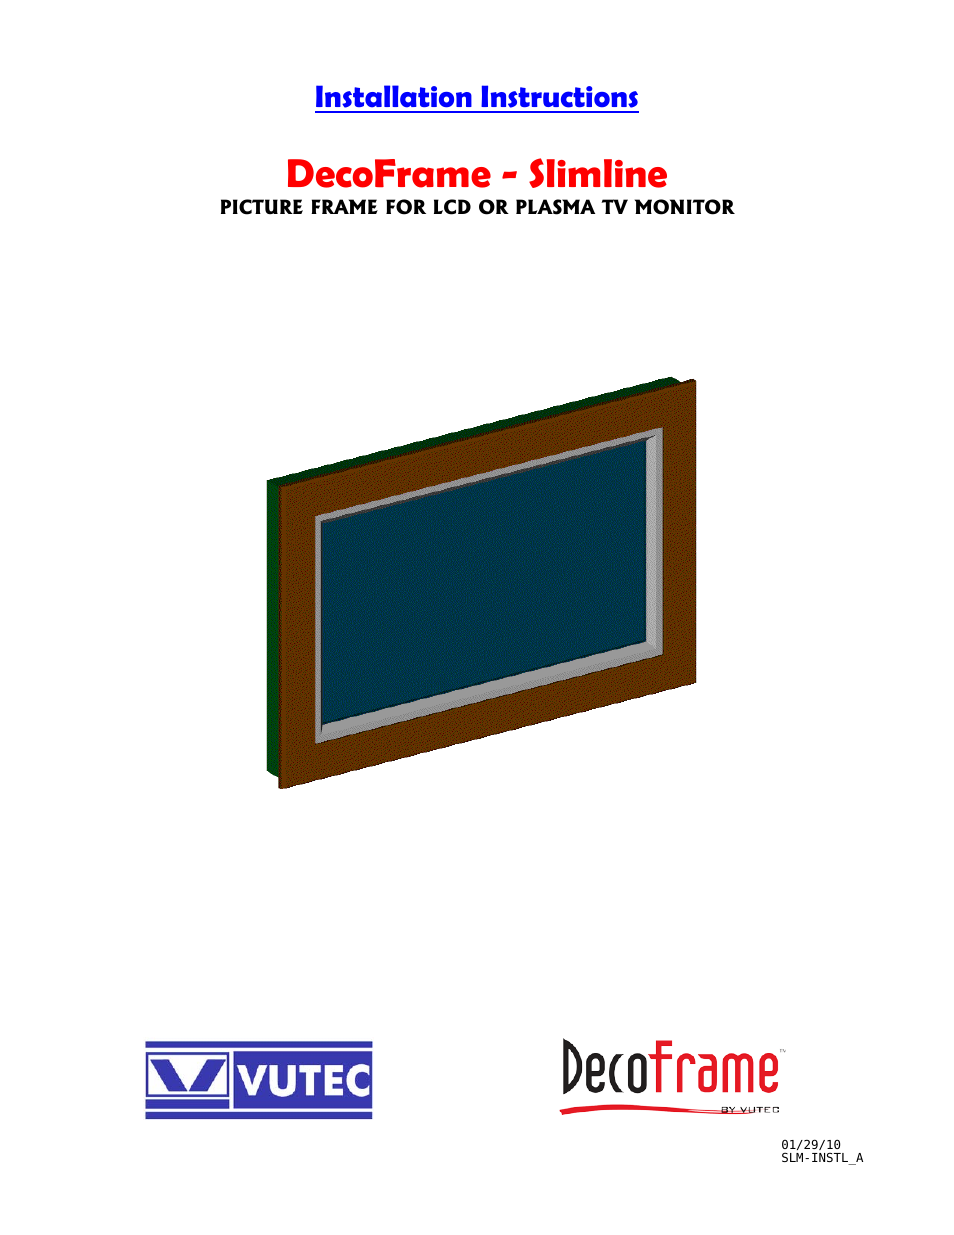 DECOFRAME Slimline - Installation Instructions